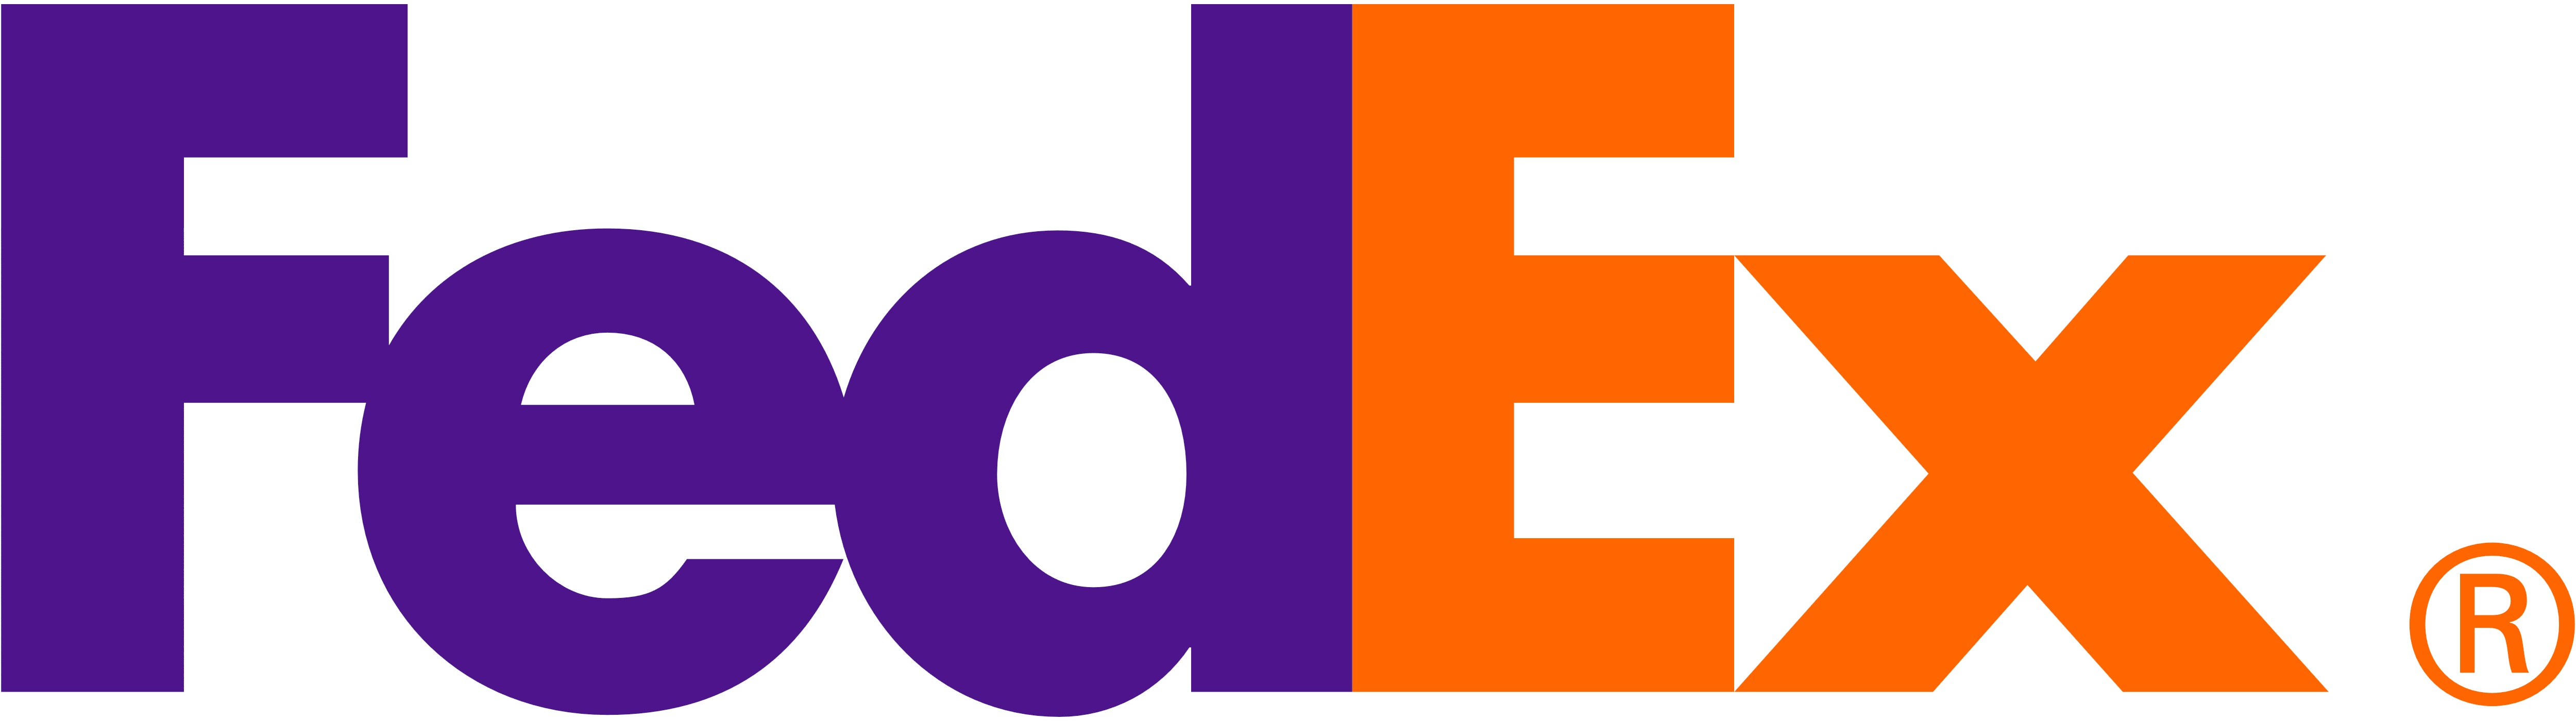 FedEx Logos Download